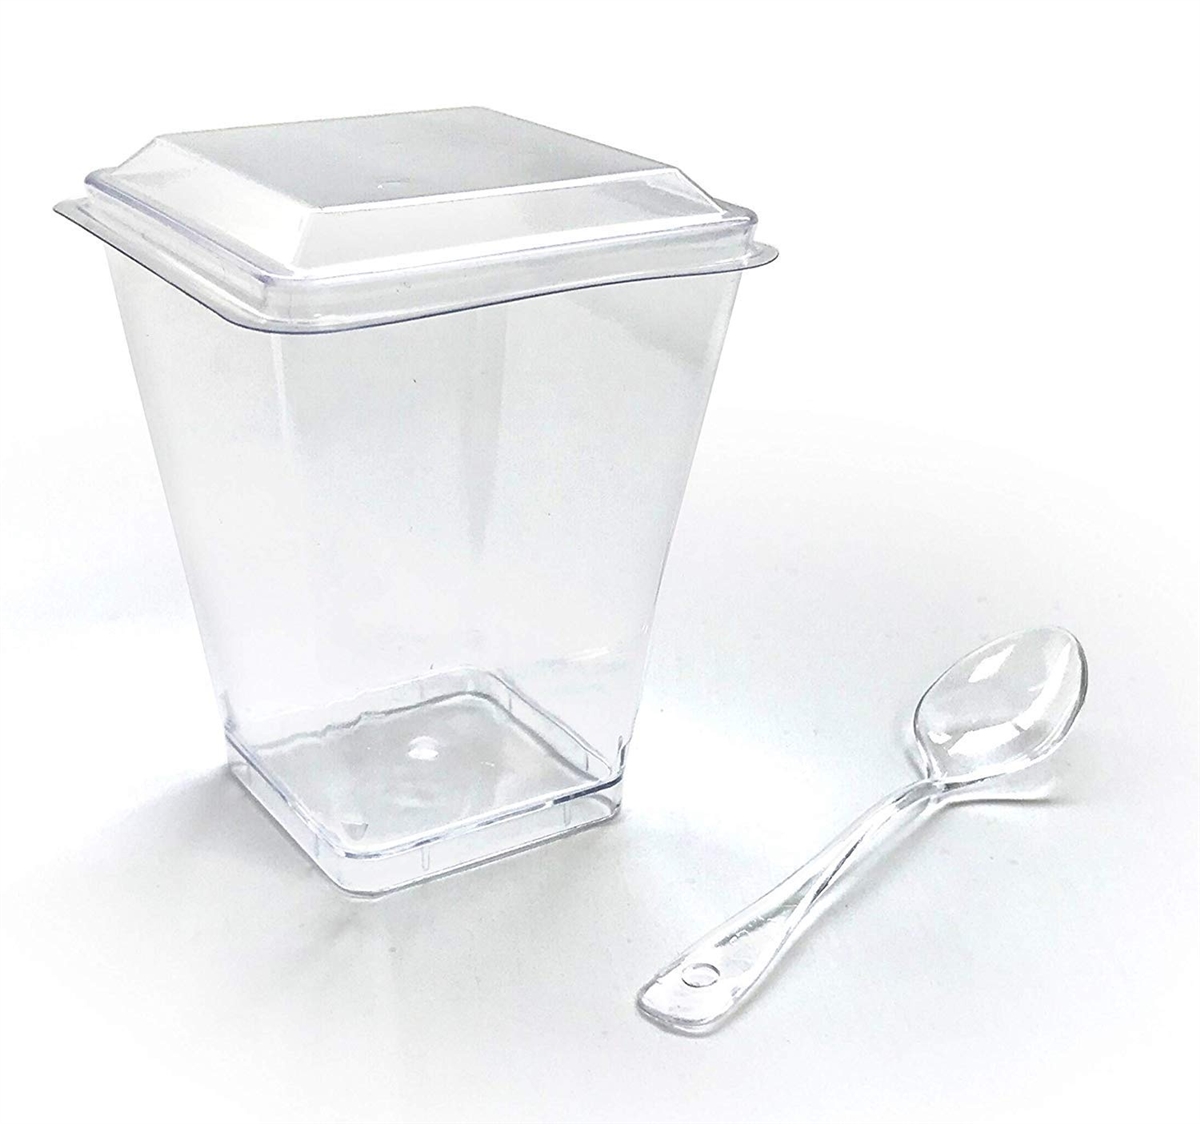 Zappy Square 5 oz Dessert Cups Disposable Plastic Appetizer Parfait Cup  with Lids and Mini Spoons